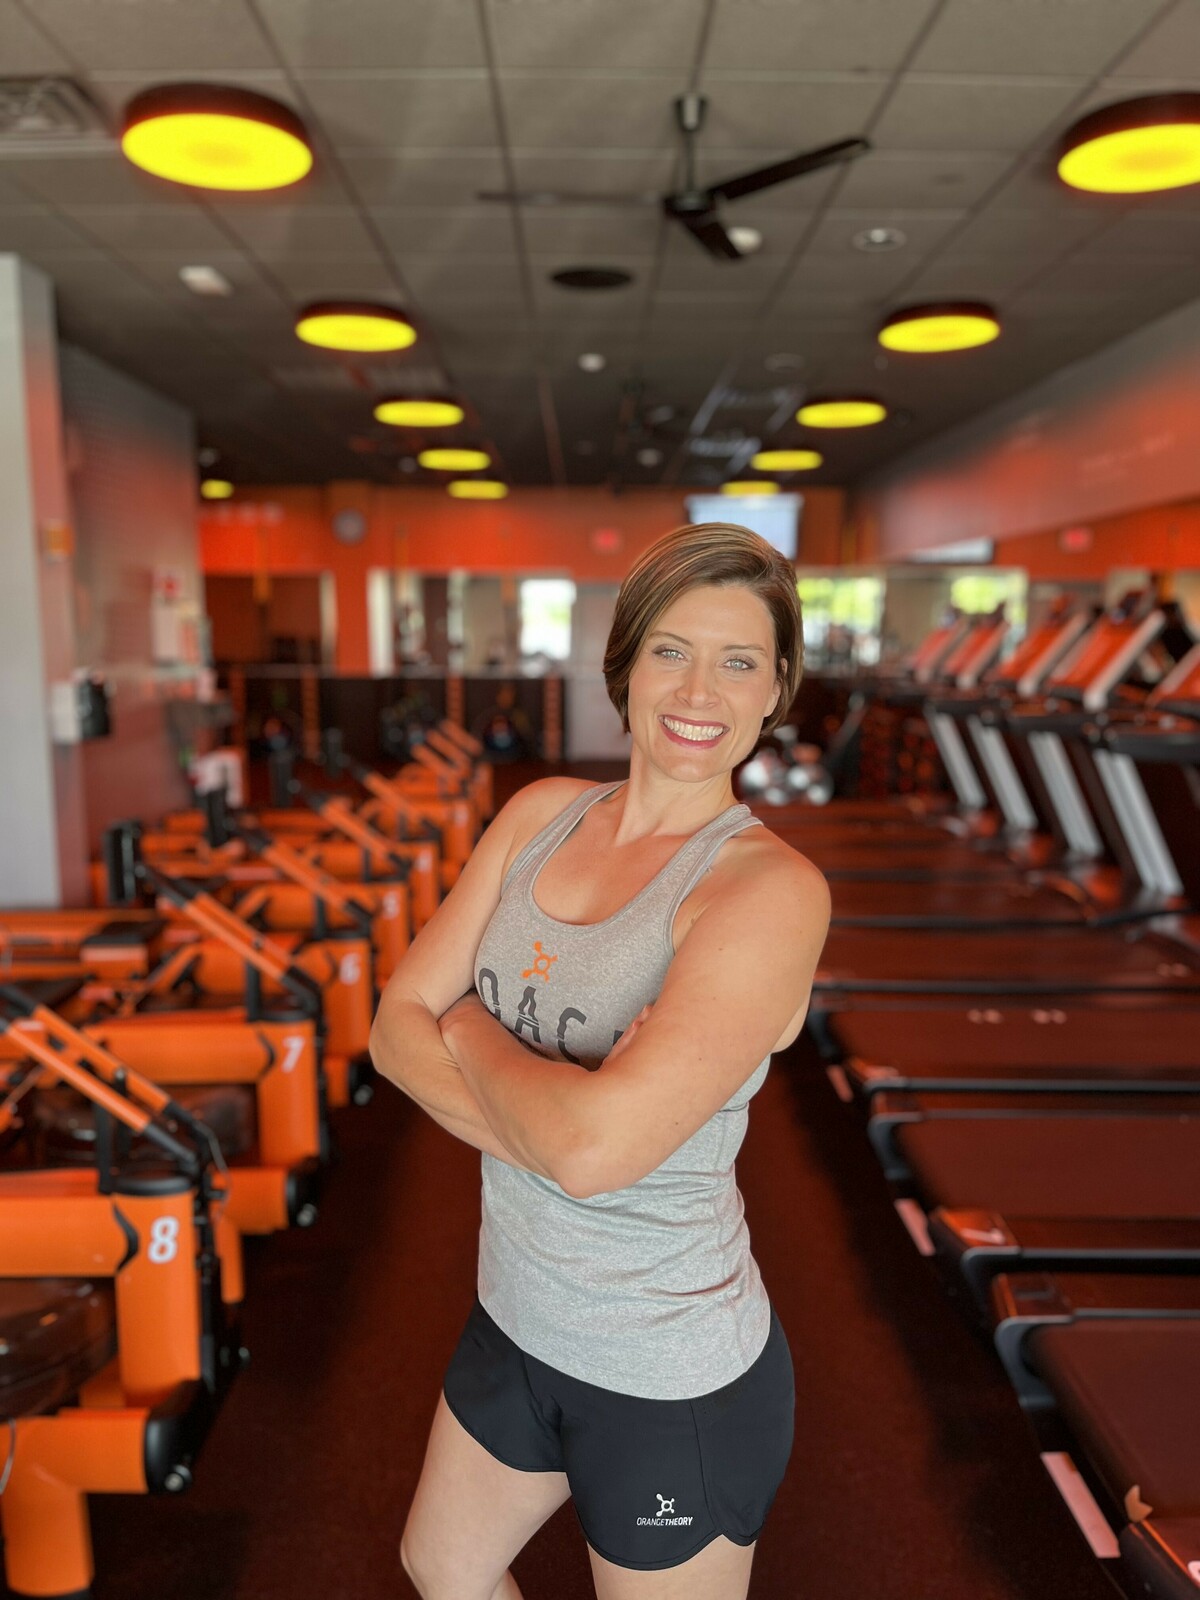 Everyone meet Coach Laura! - Orangetheory Fitness Merrick